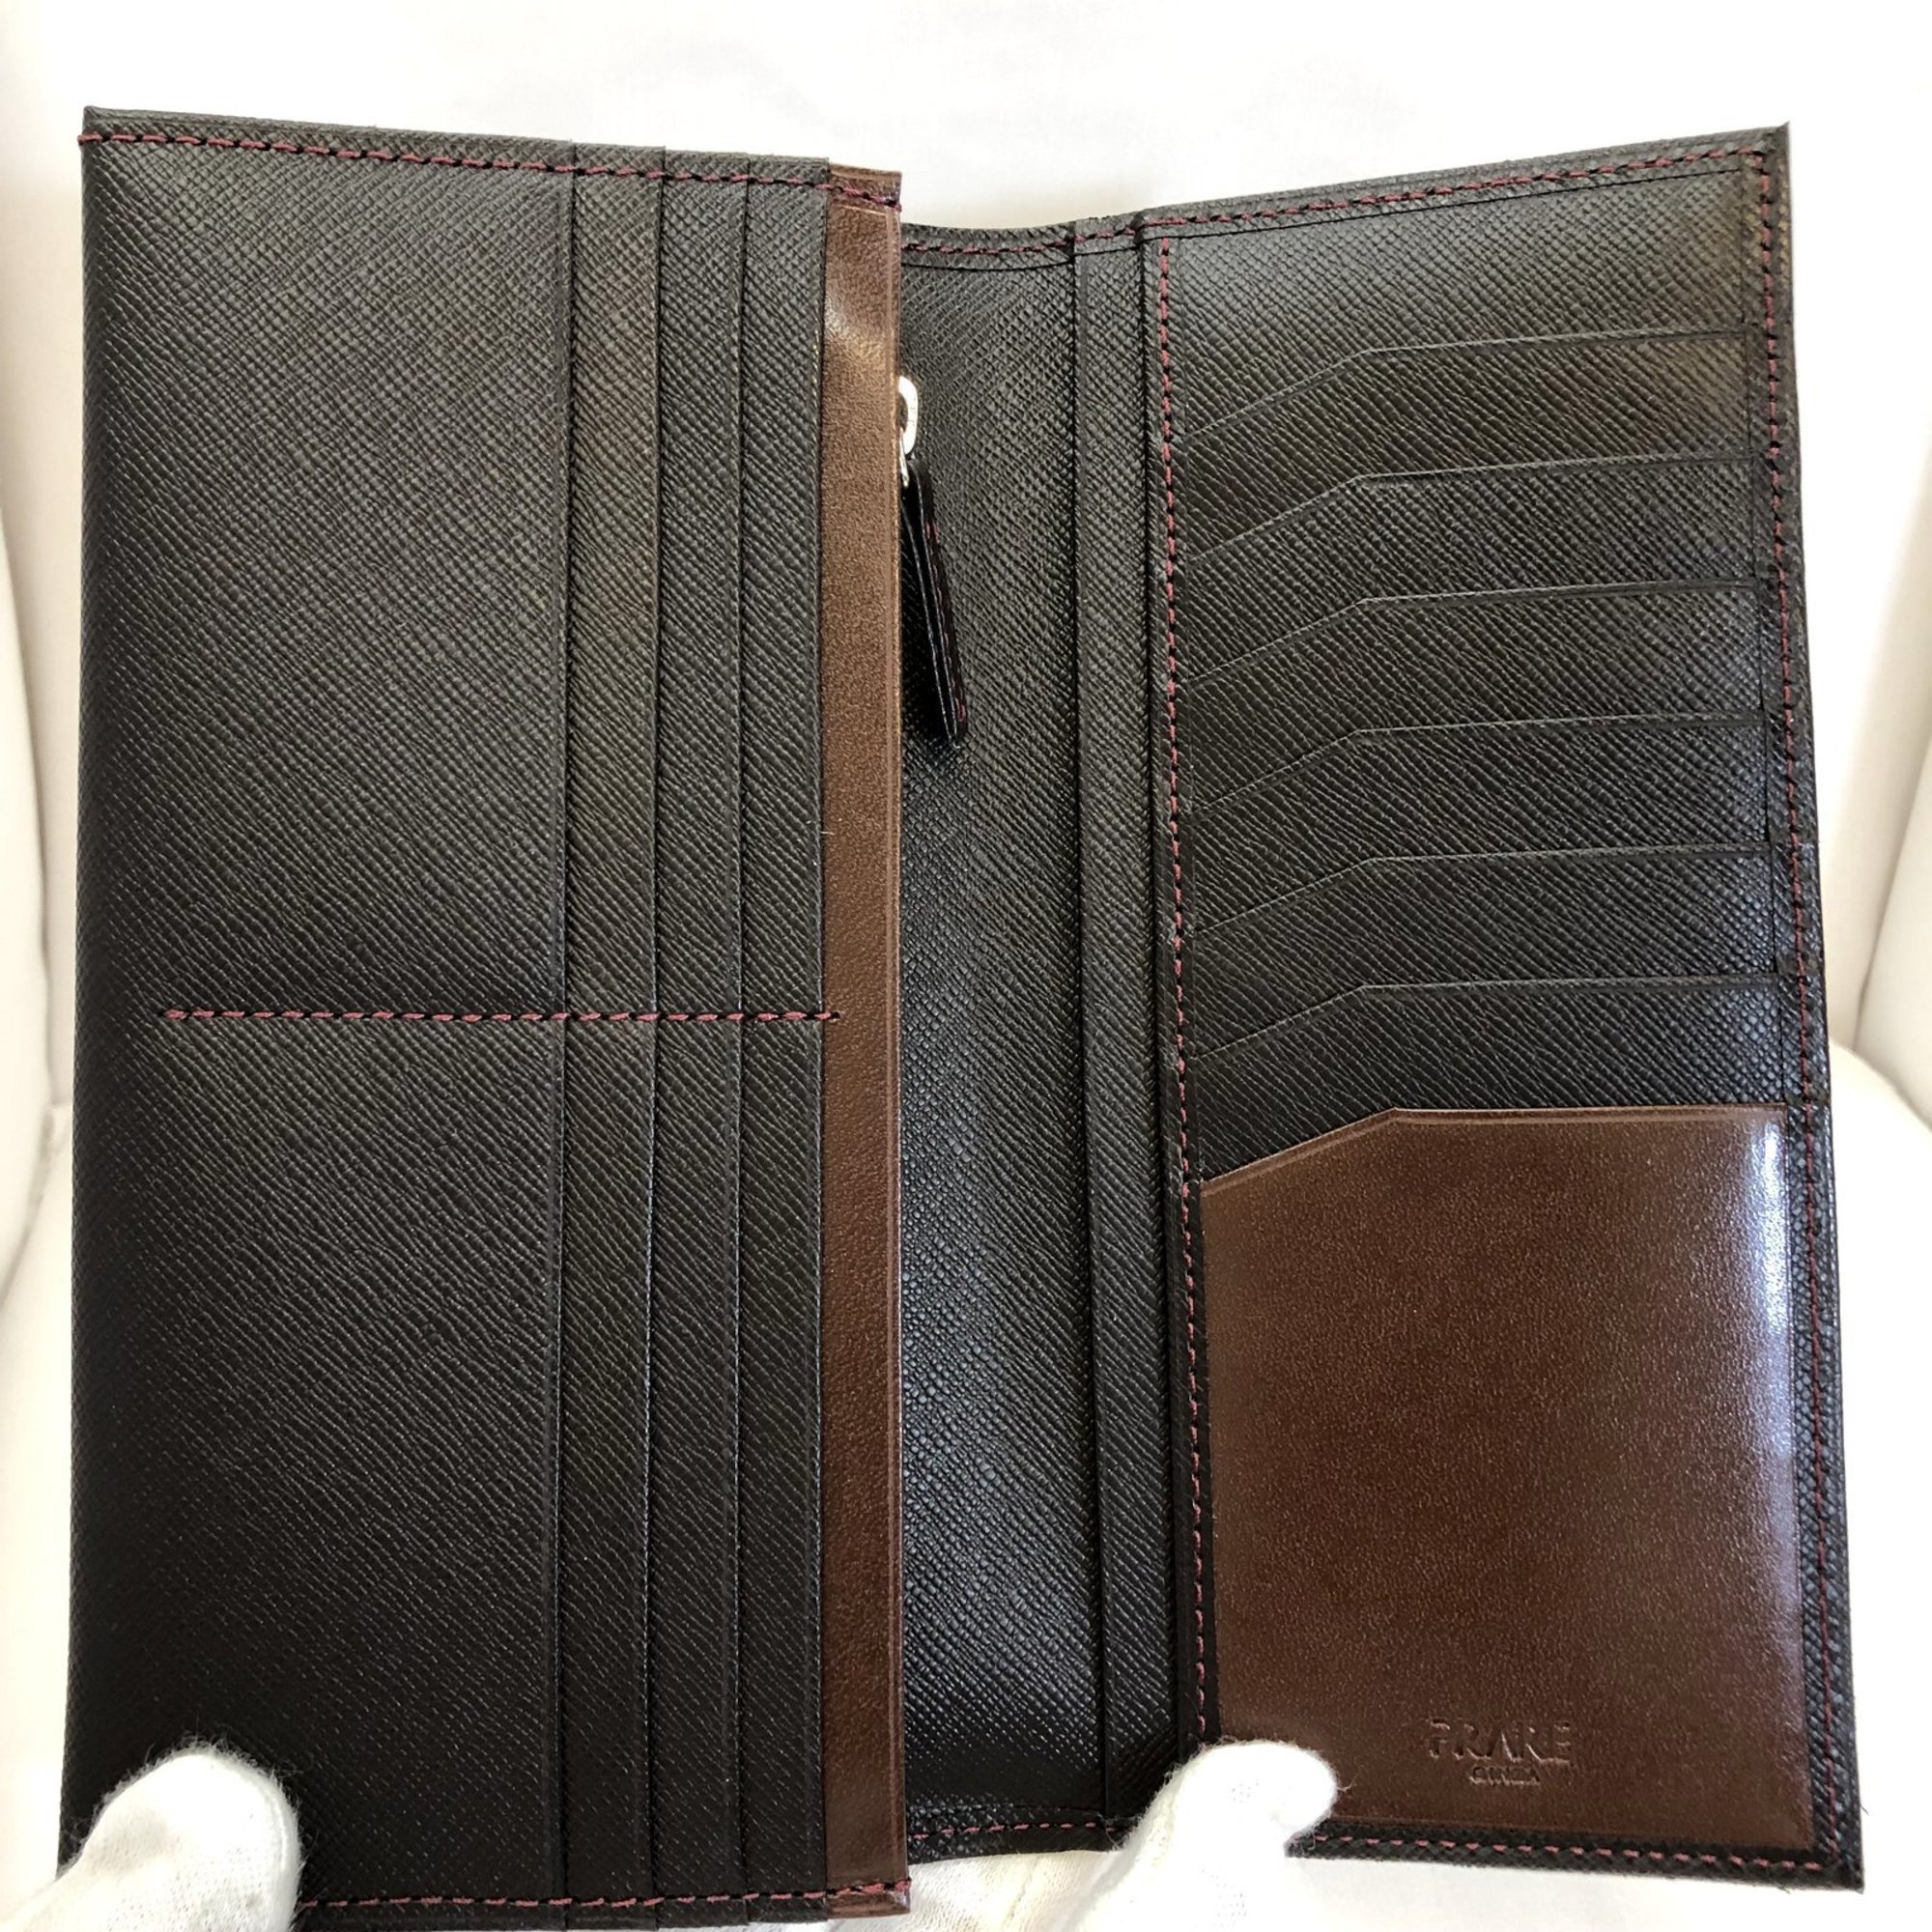 PRAIRIE GINZA Bi-fold long wallet Dark brown Stitch NP75617 Embossed leather Long Men's Mikunigaoka store ITW4T4JDVM2Y RH11775M